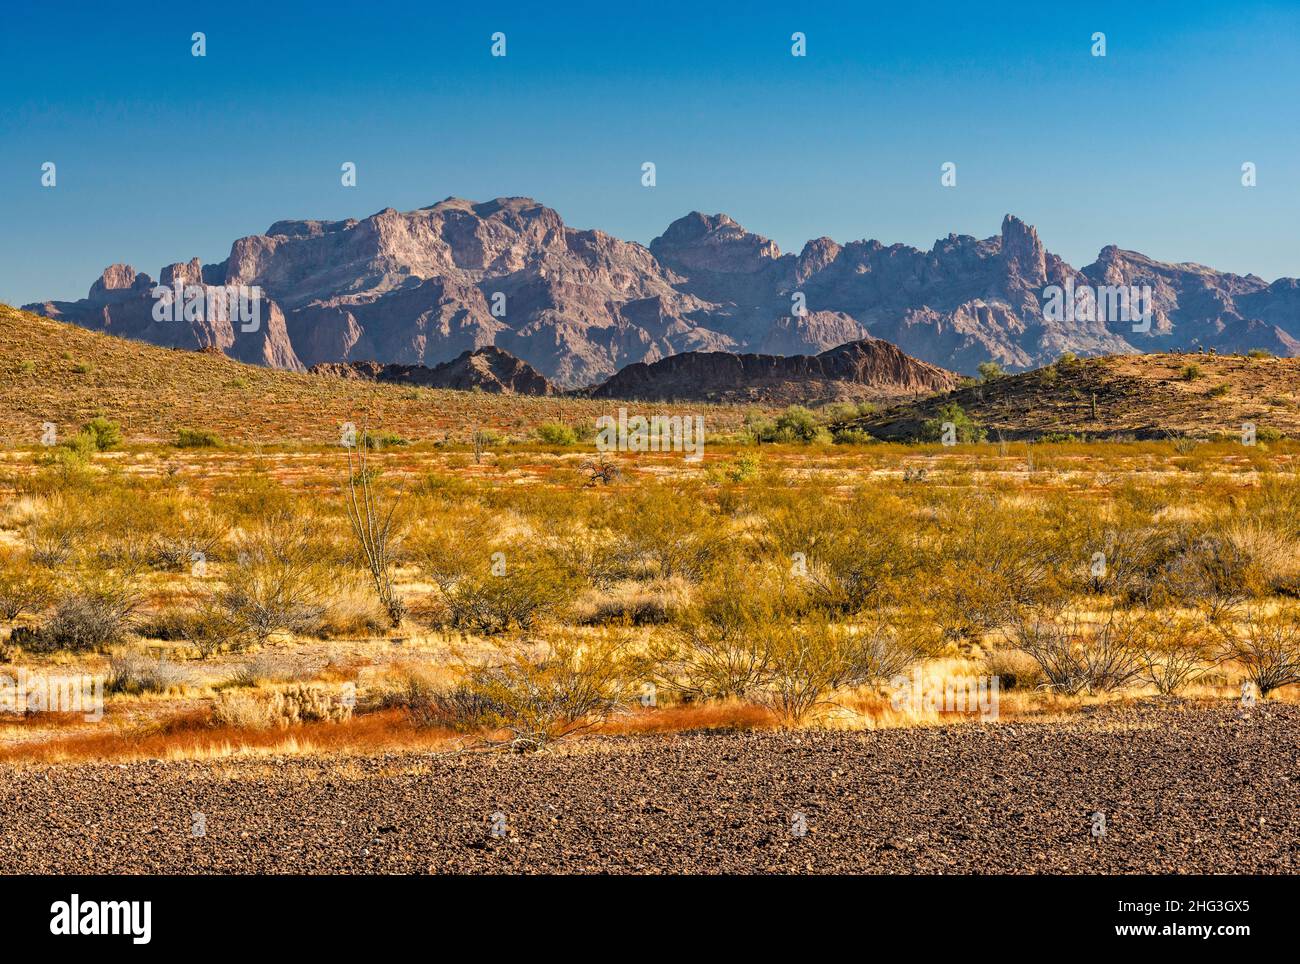 KOFA Mountains, Blick bei Sonnenaufgang von der King Road in King Valley, Sonoran Desert, Arizona, USA Stockfoto